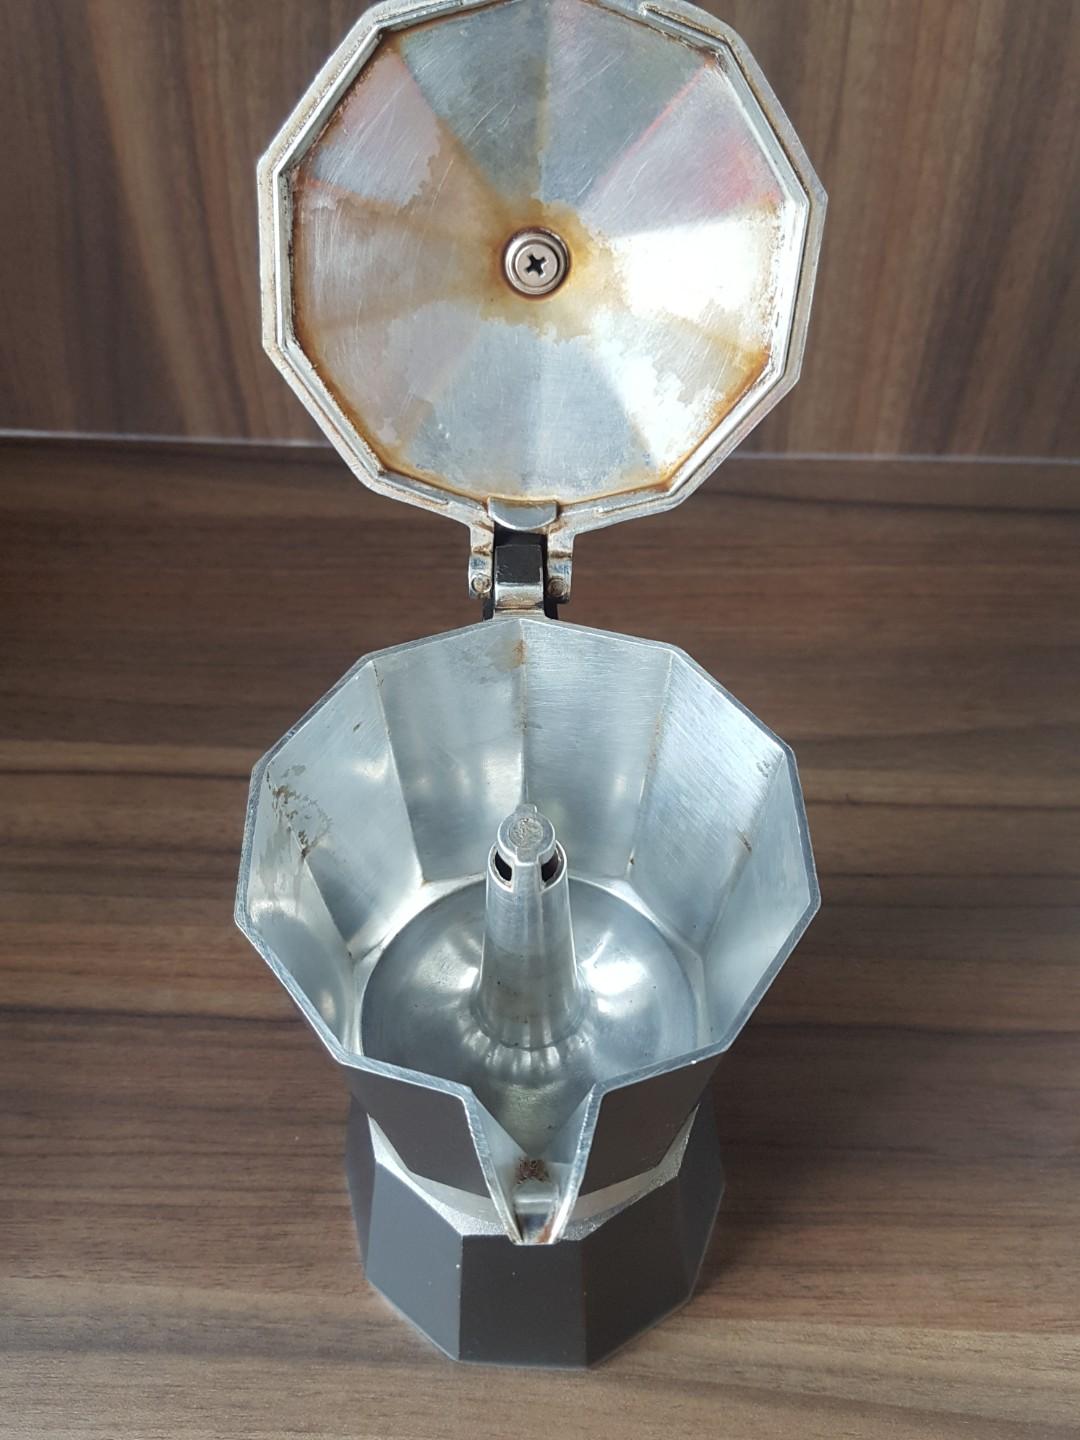 Pedrini Mocha Pot 6 Cup — Fika Coffee Roasters